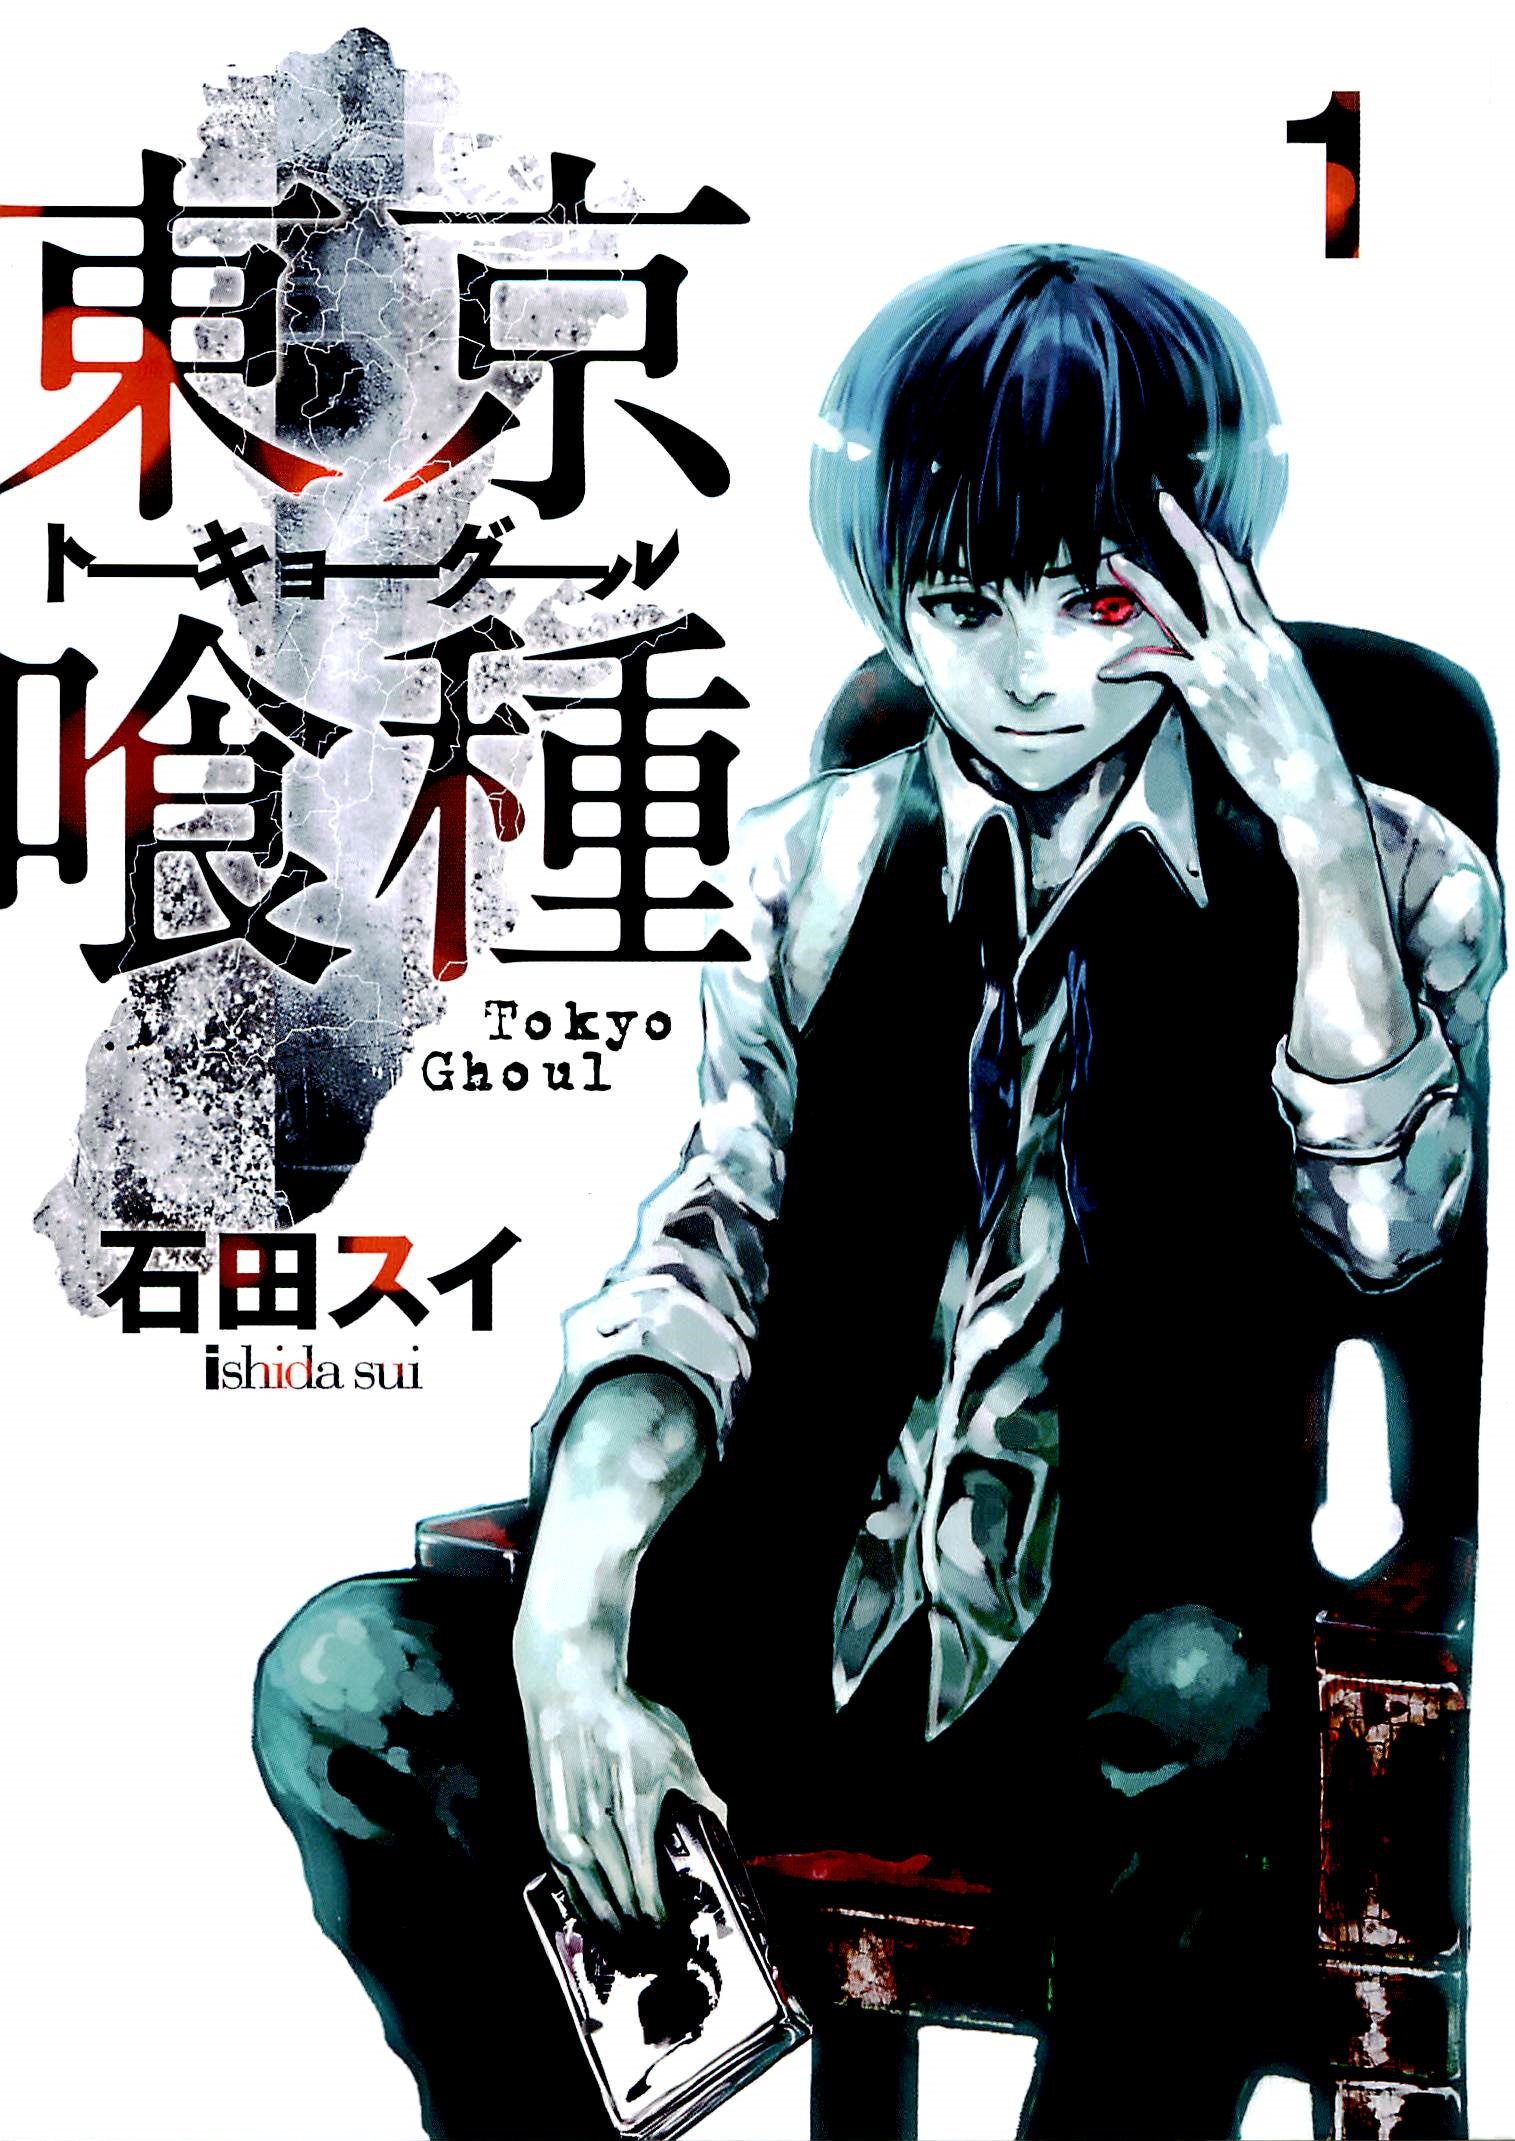 Tokyo Ghoul (Manga) | Tokyo Ghoul Wiki | Fandom